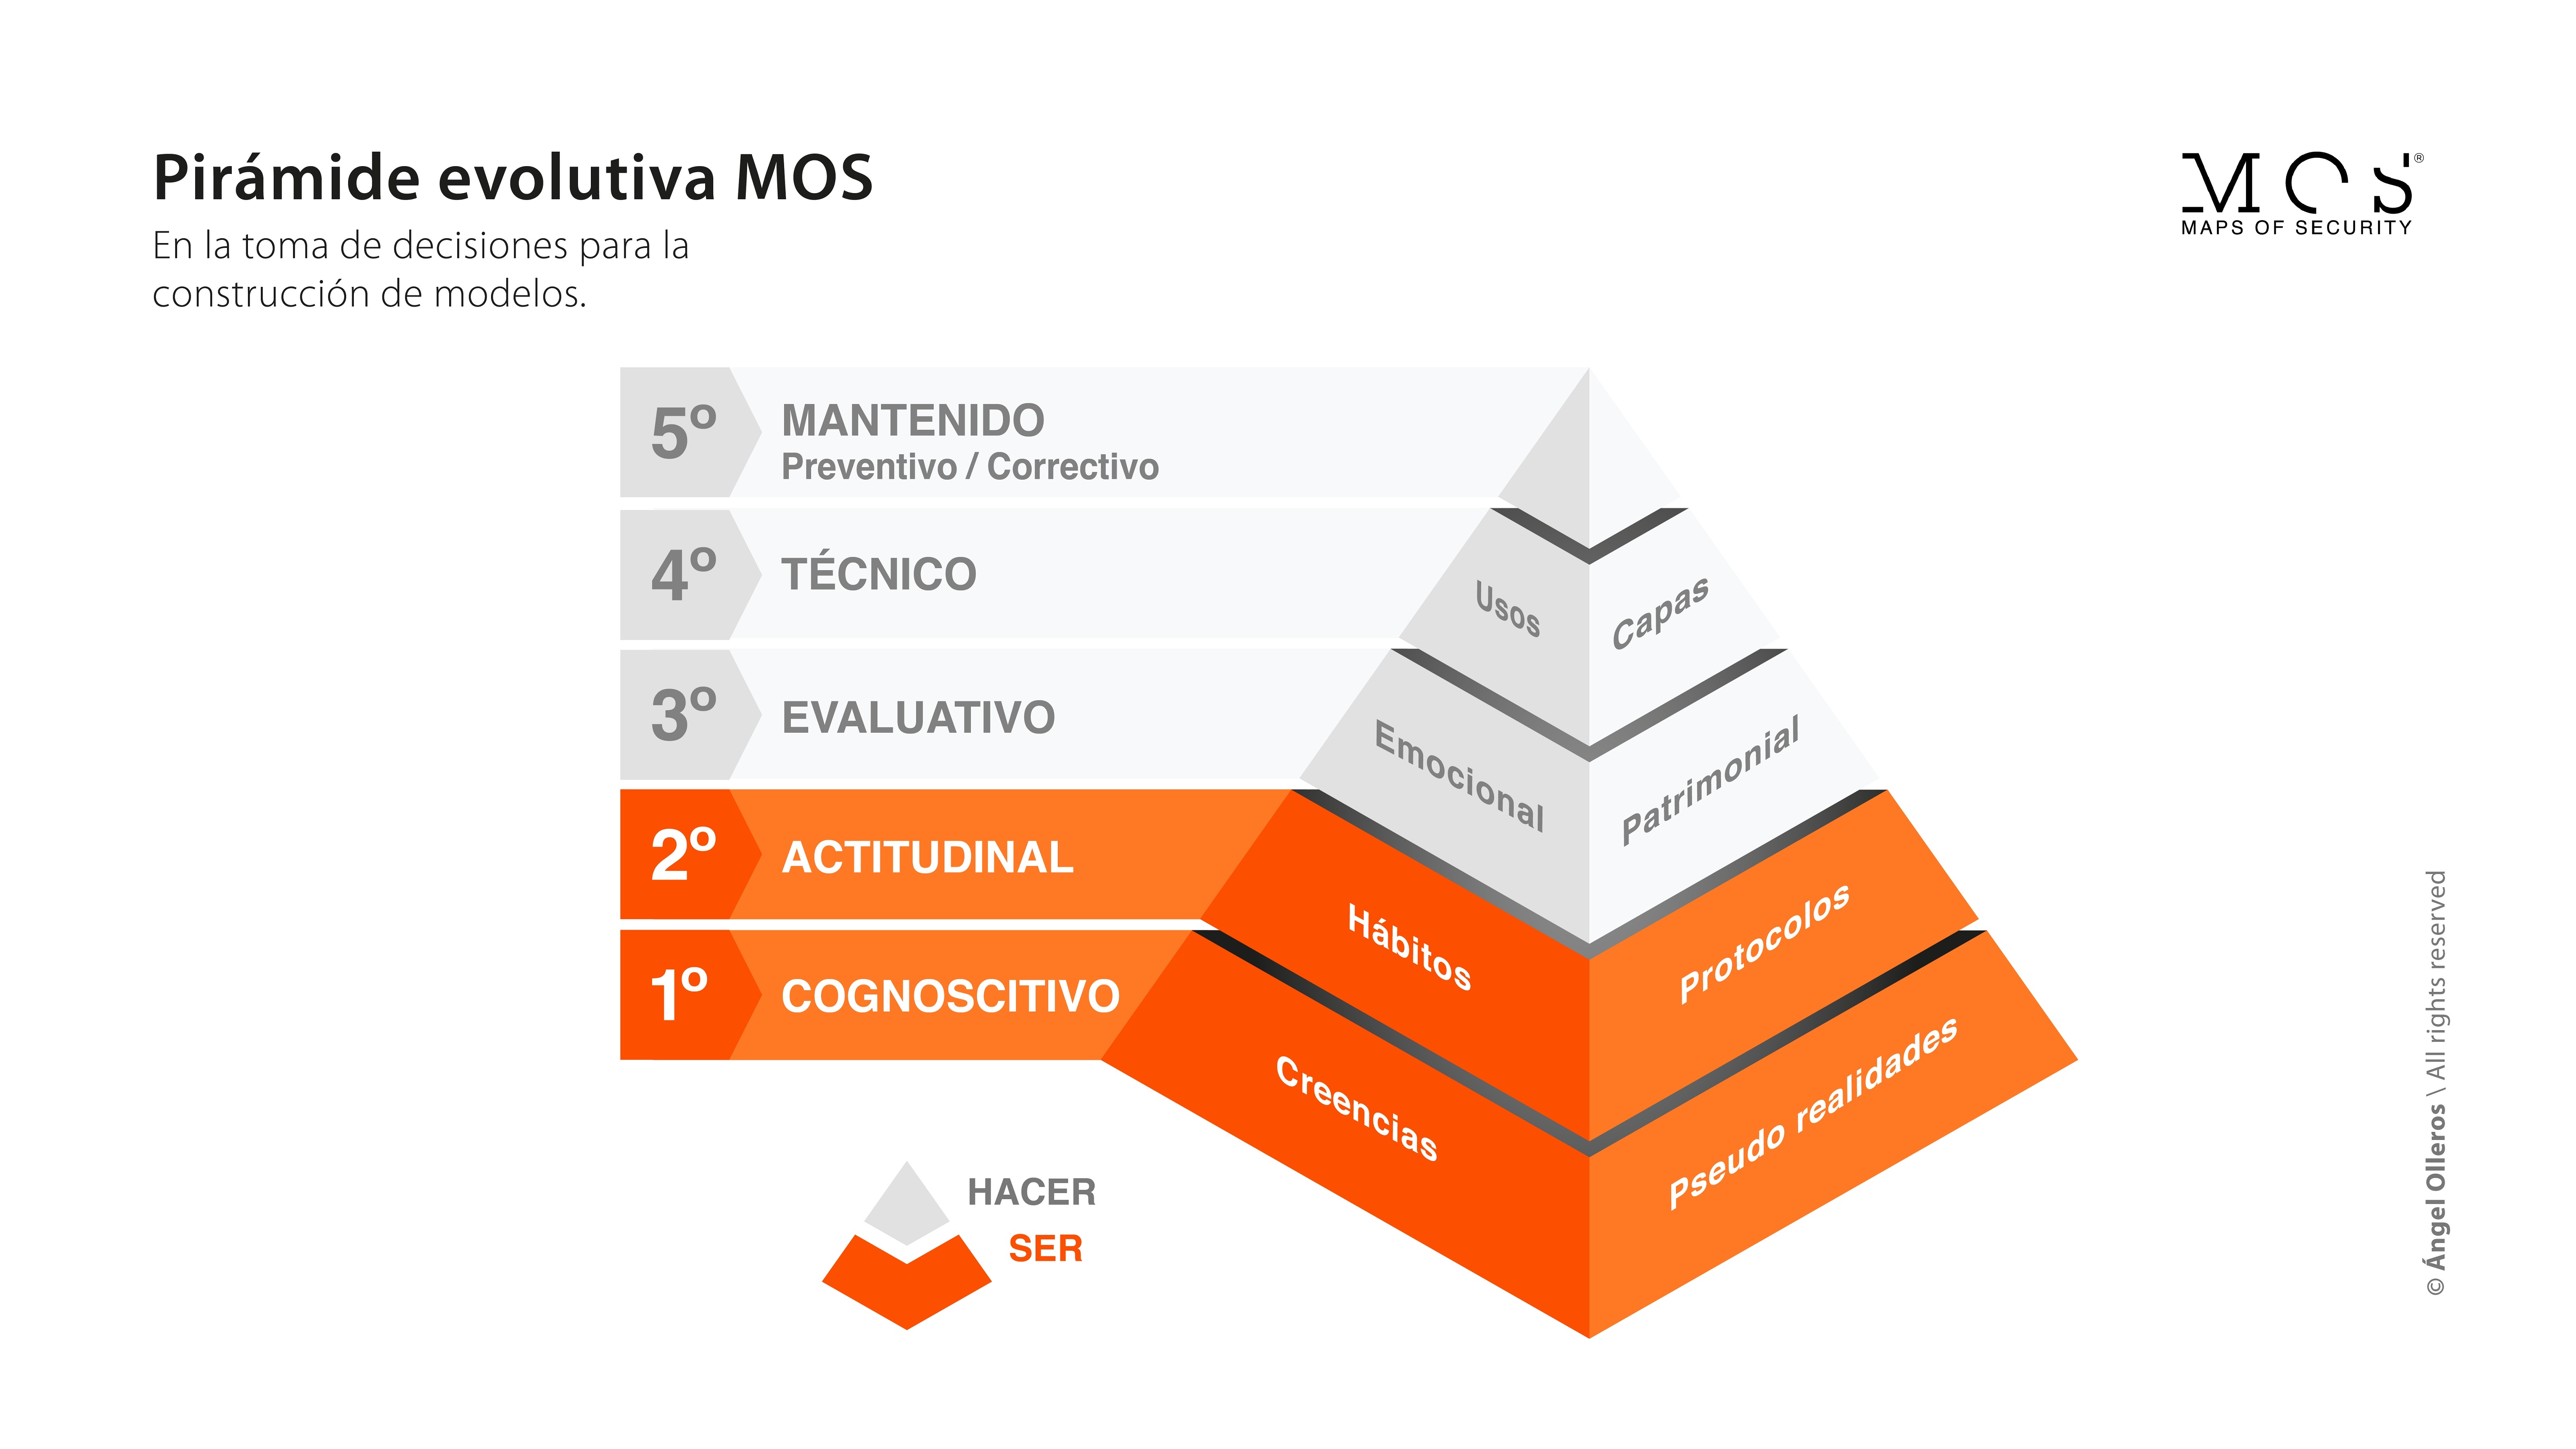 Pirámide MOS_cinco niveles toma decisiones